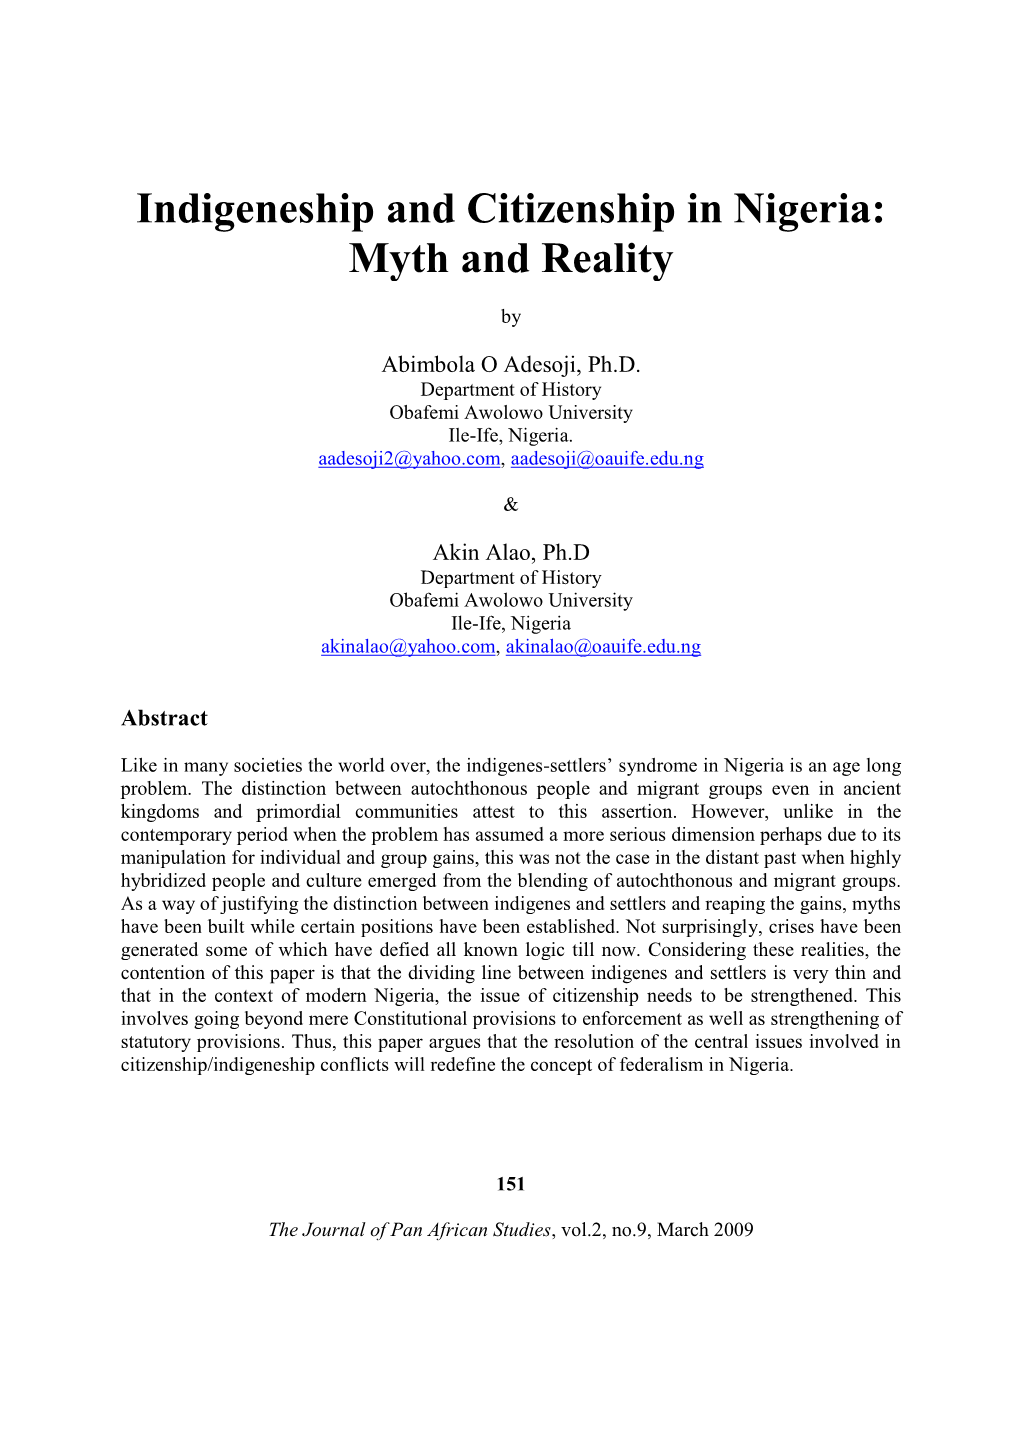 Indigeneship and Citizenship in Nigeria: Myth and Reality